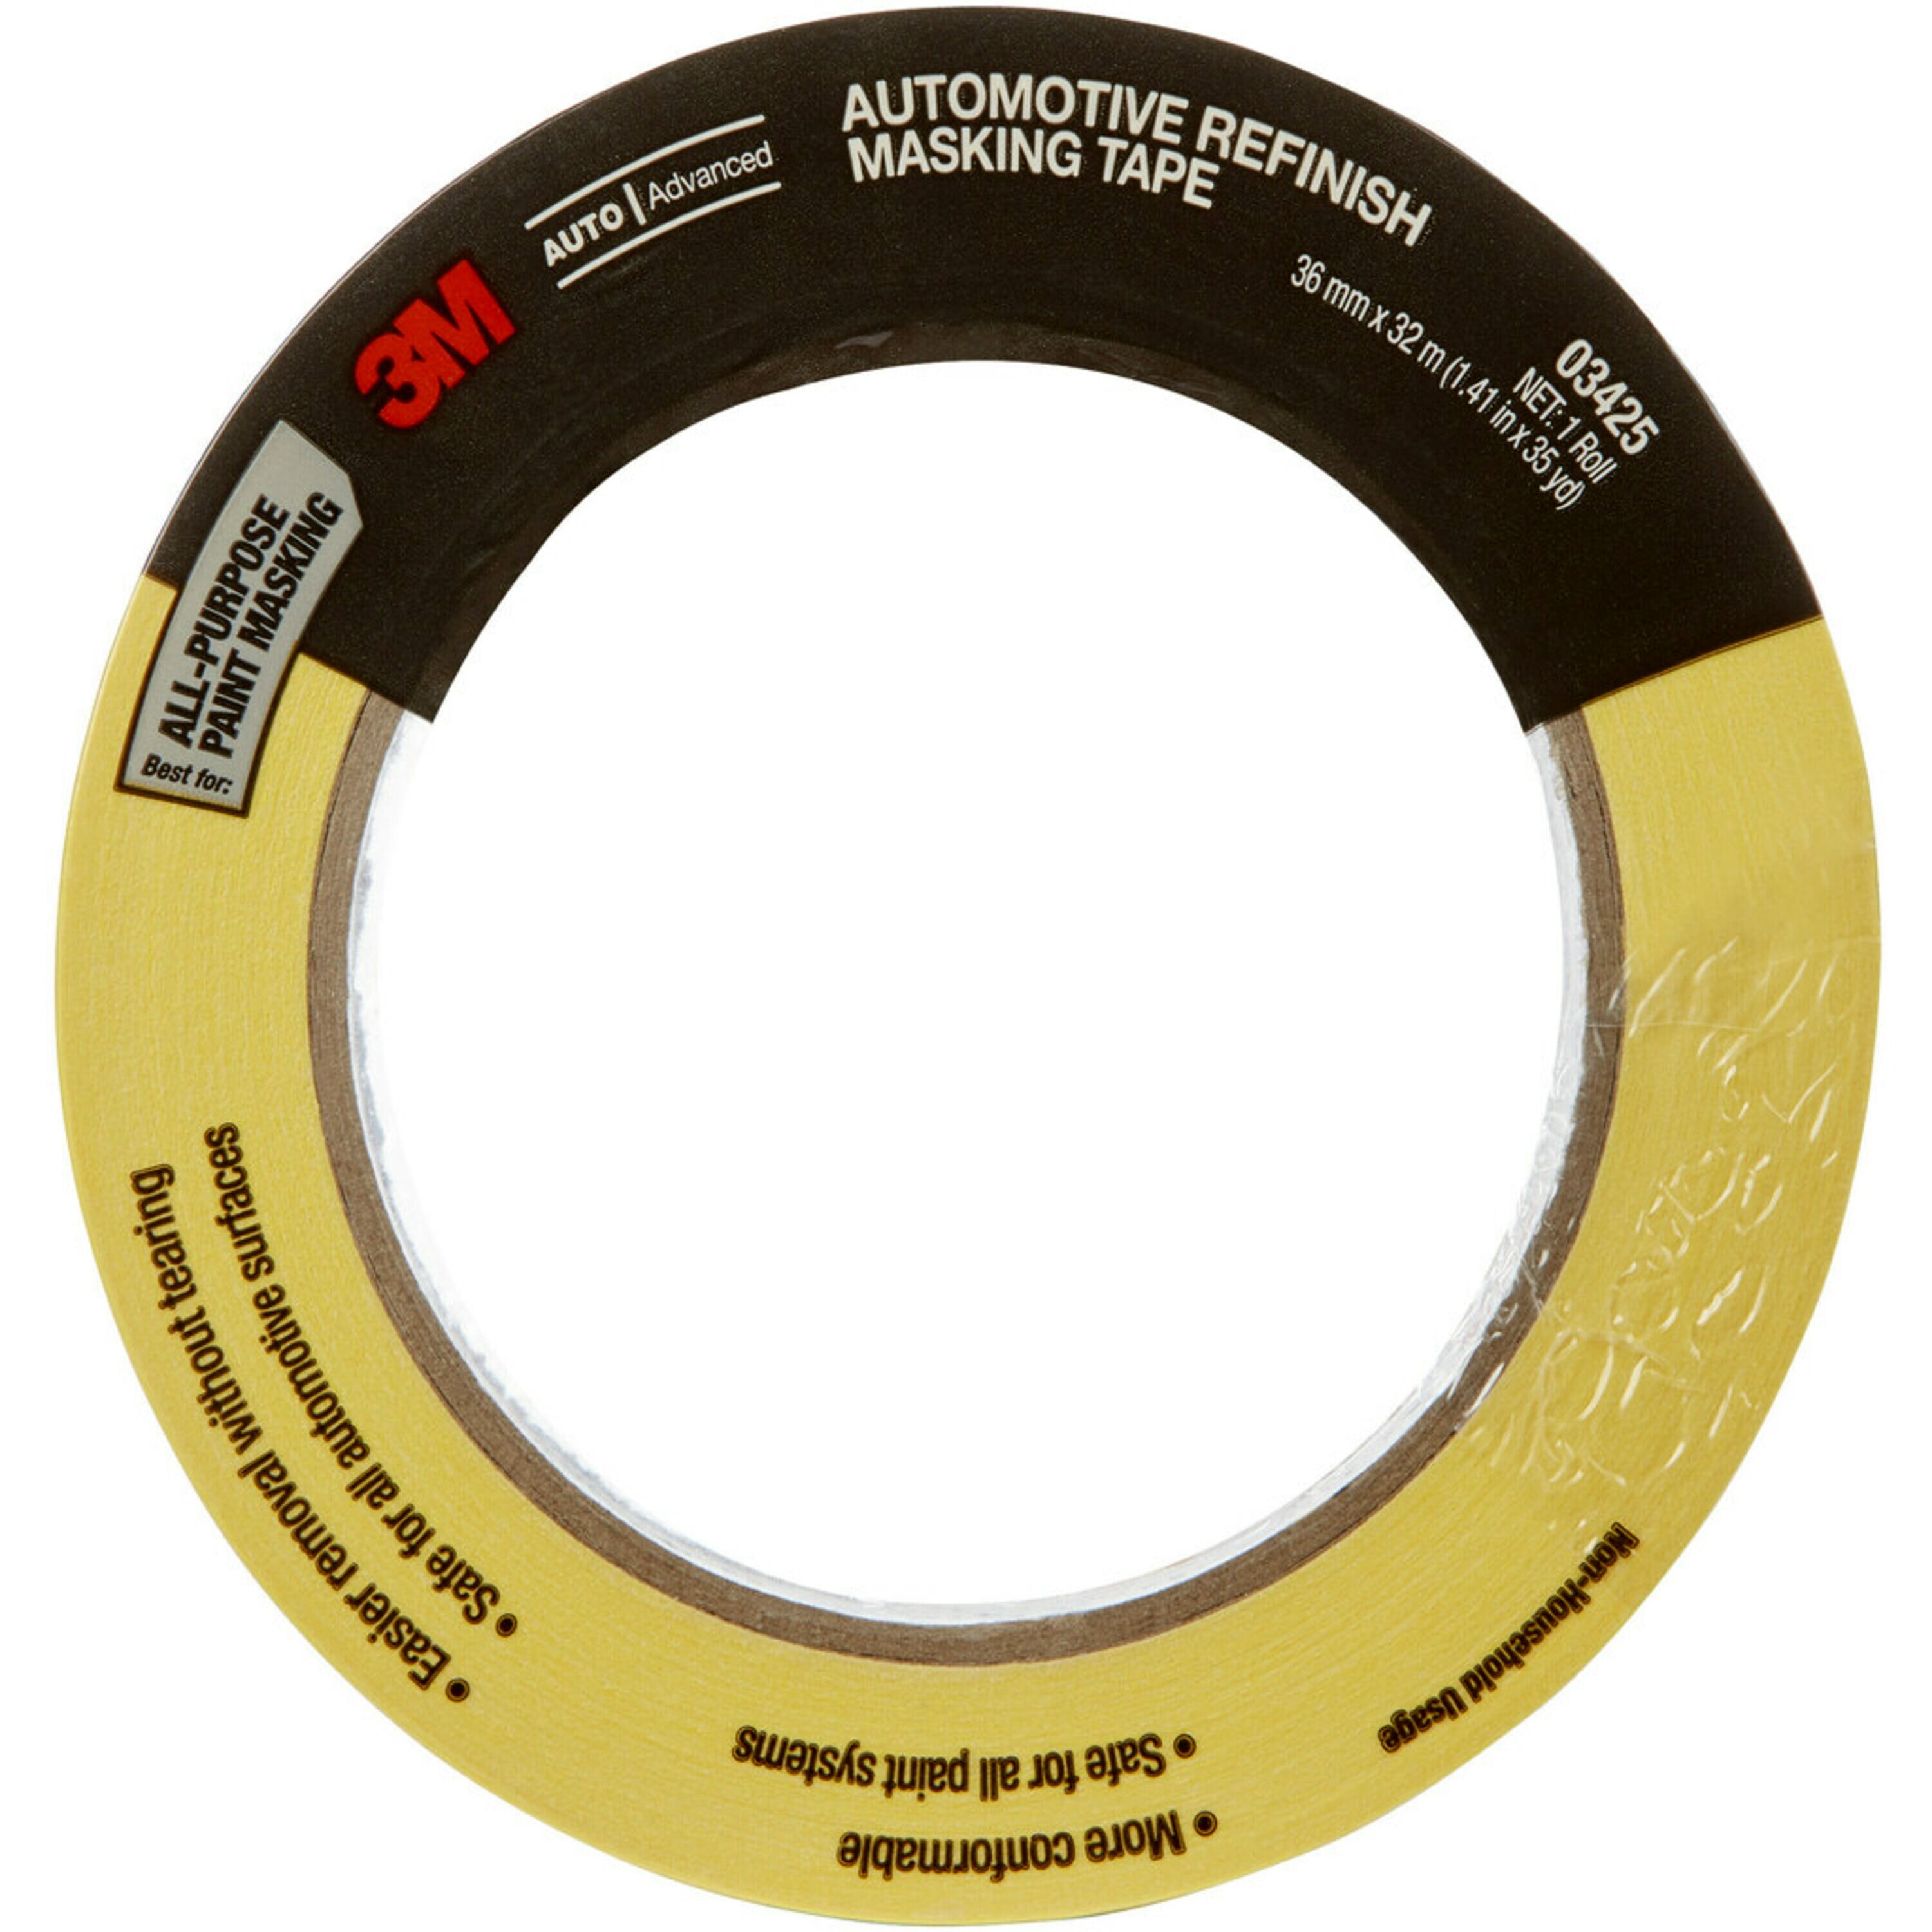 CARPRO Automotive Masking Tape 3/16- 30% More Tape!